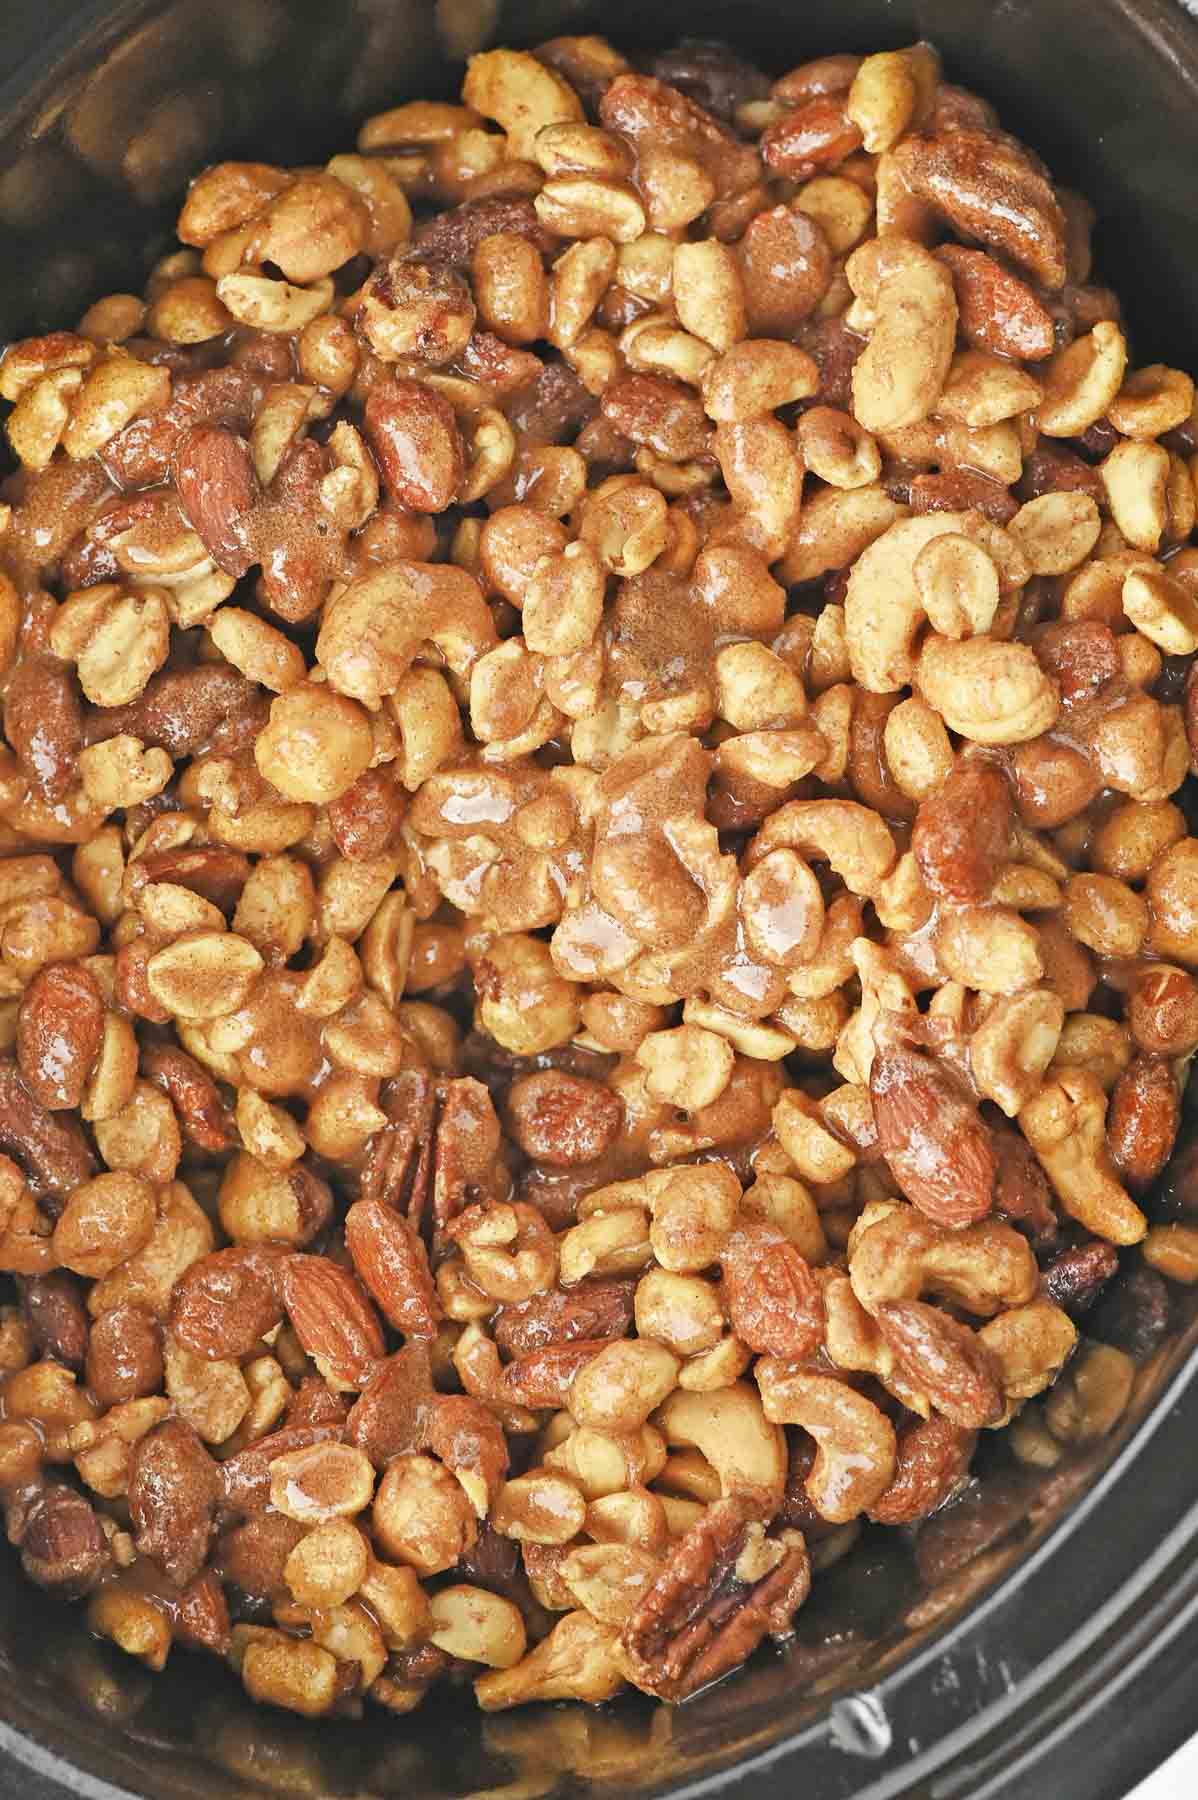 A crock pot full of nuts and pecans in a cinnamon sugar mixture.